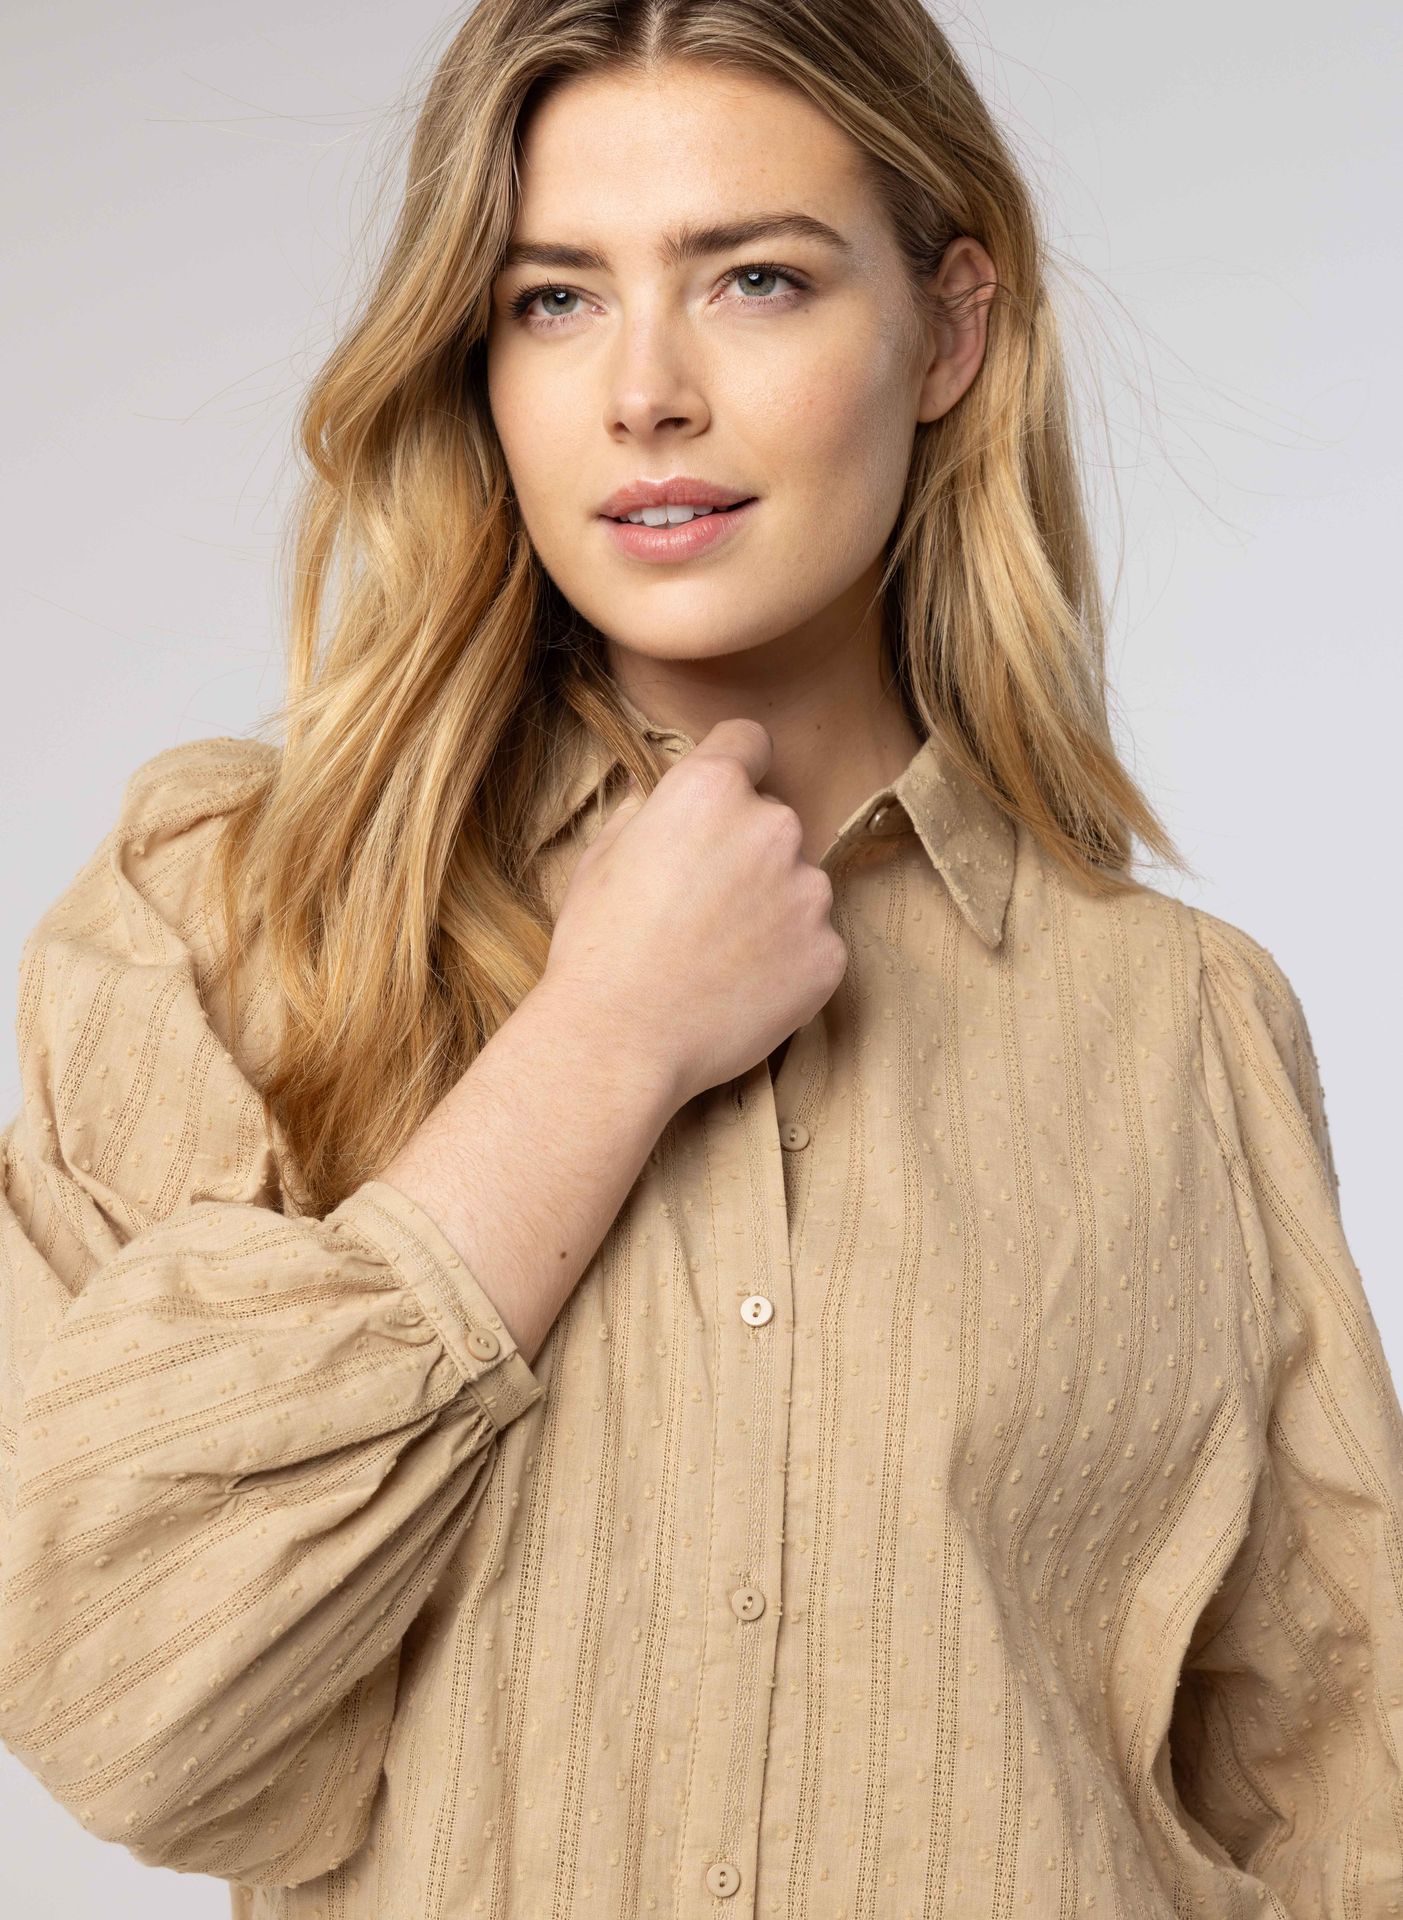 Norah Zandkleurige blouse  sand 214306-110